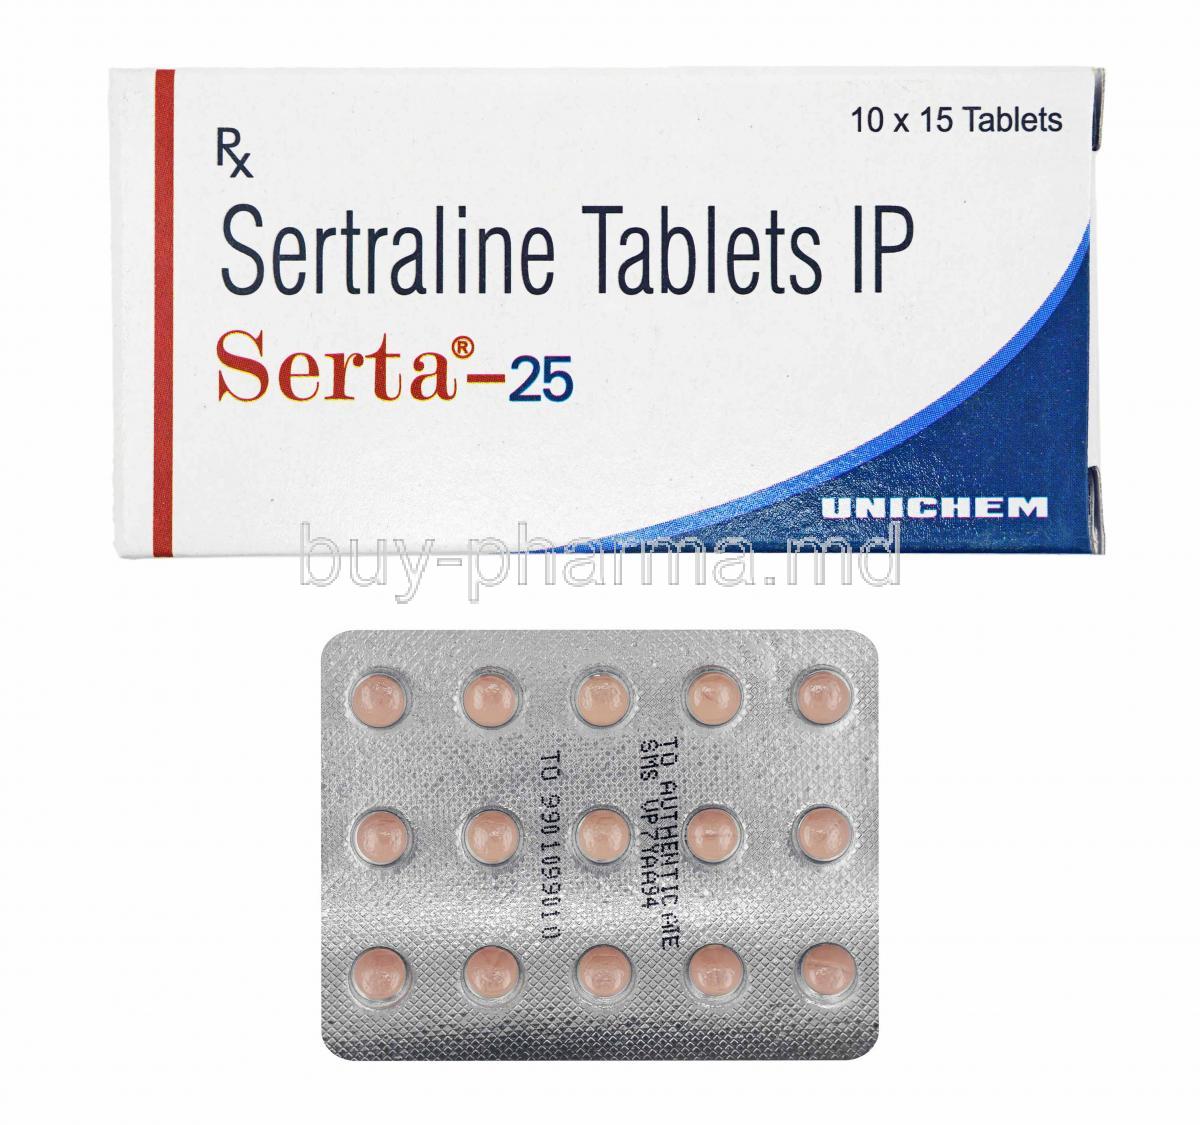 Serta, Sertraline 25mg box and tablets